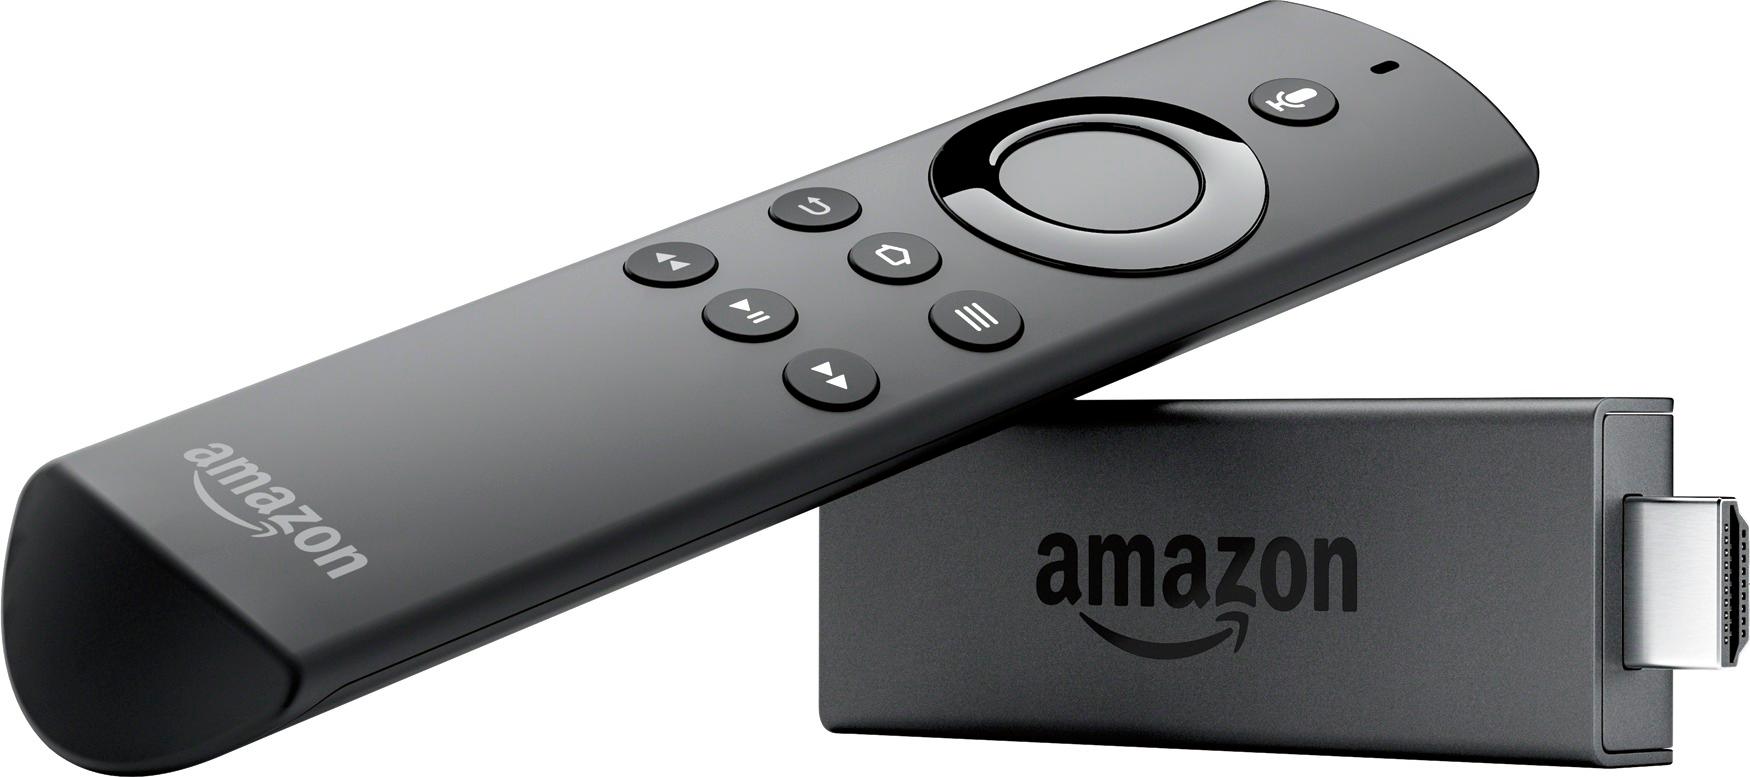 Best Buy Amazon Fire Tv Stick With Alexa Voice Remote Black B00zv9rdkk